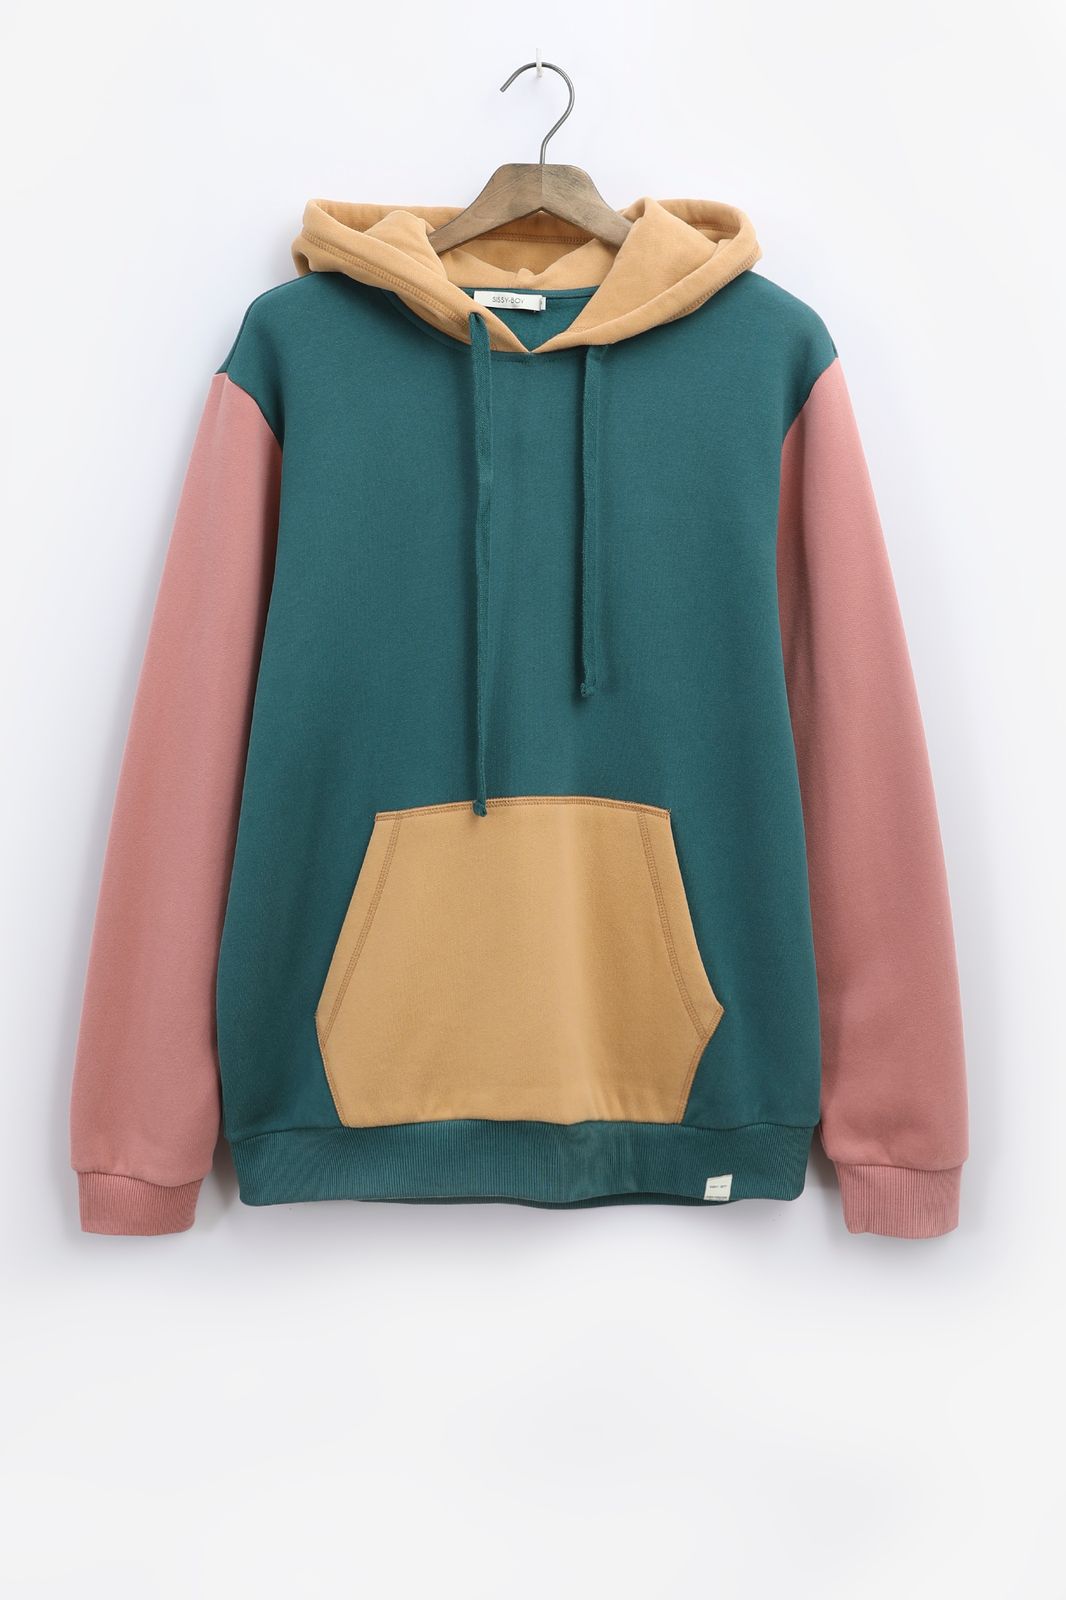 Colorblocking-Sweater mit Kapuze - dunkelgrün